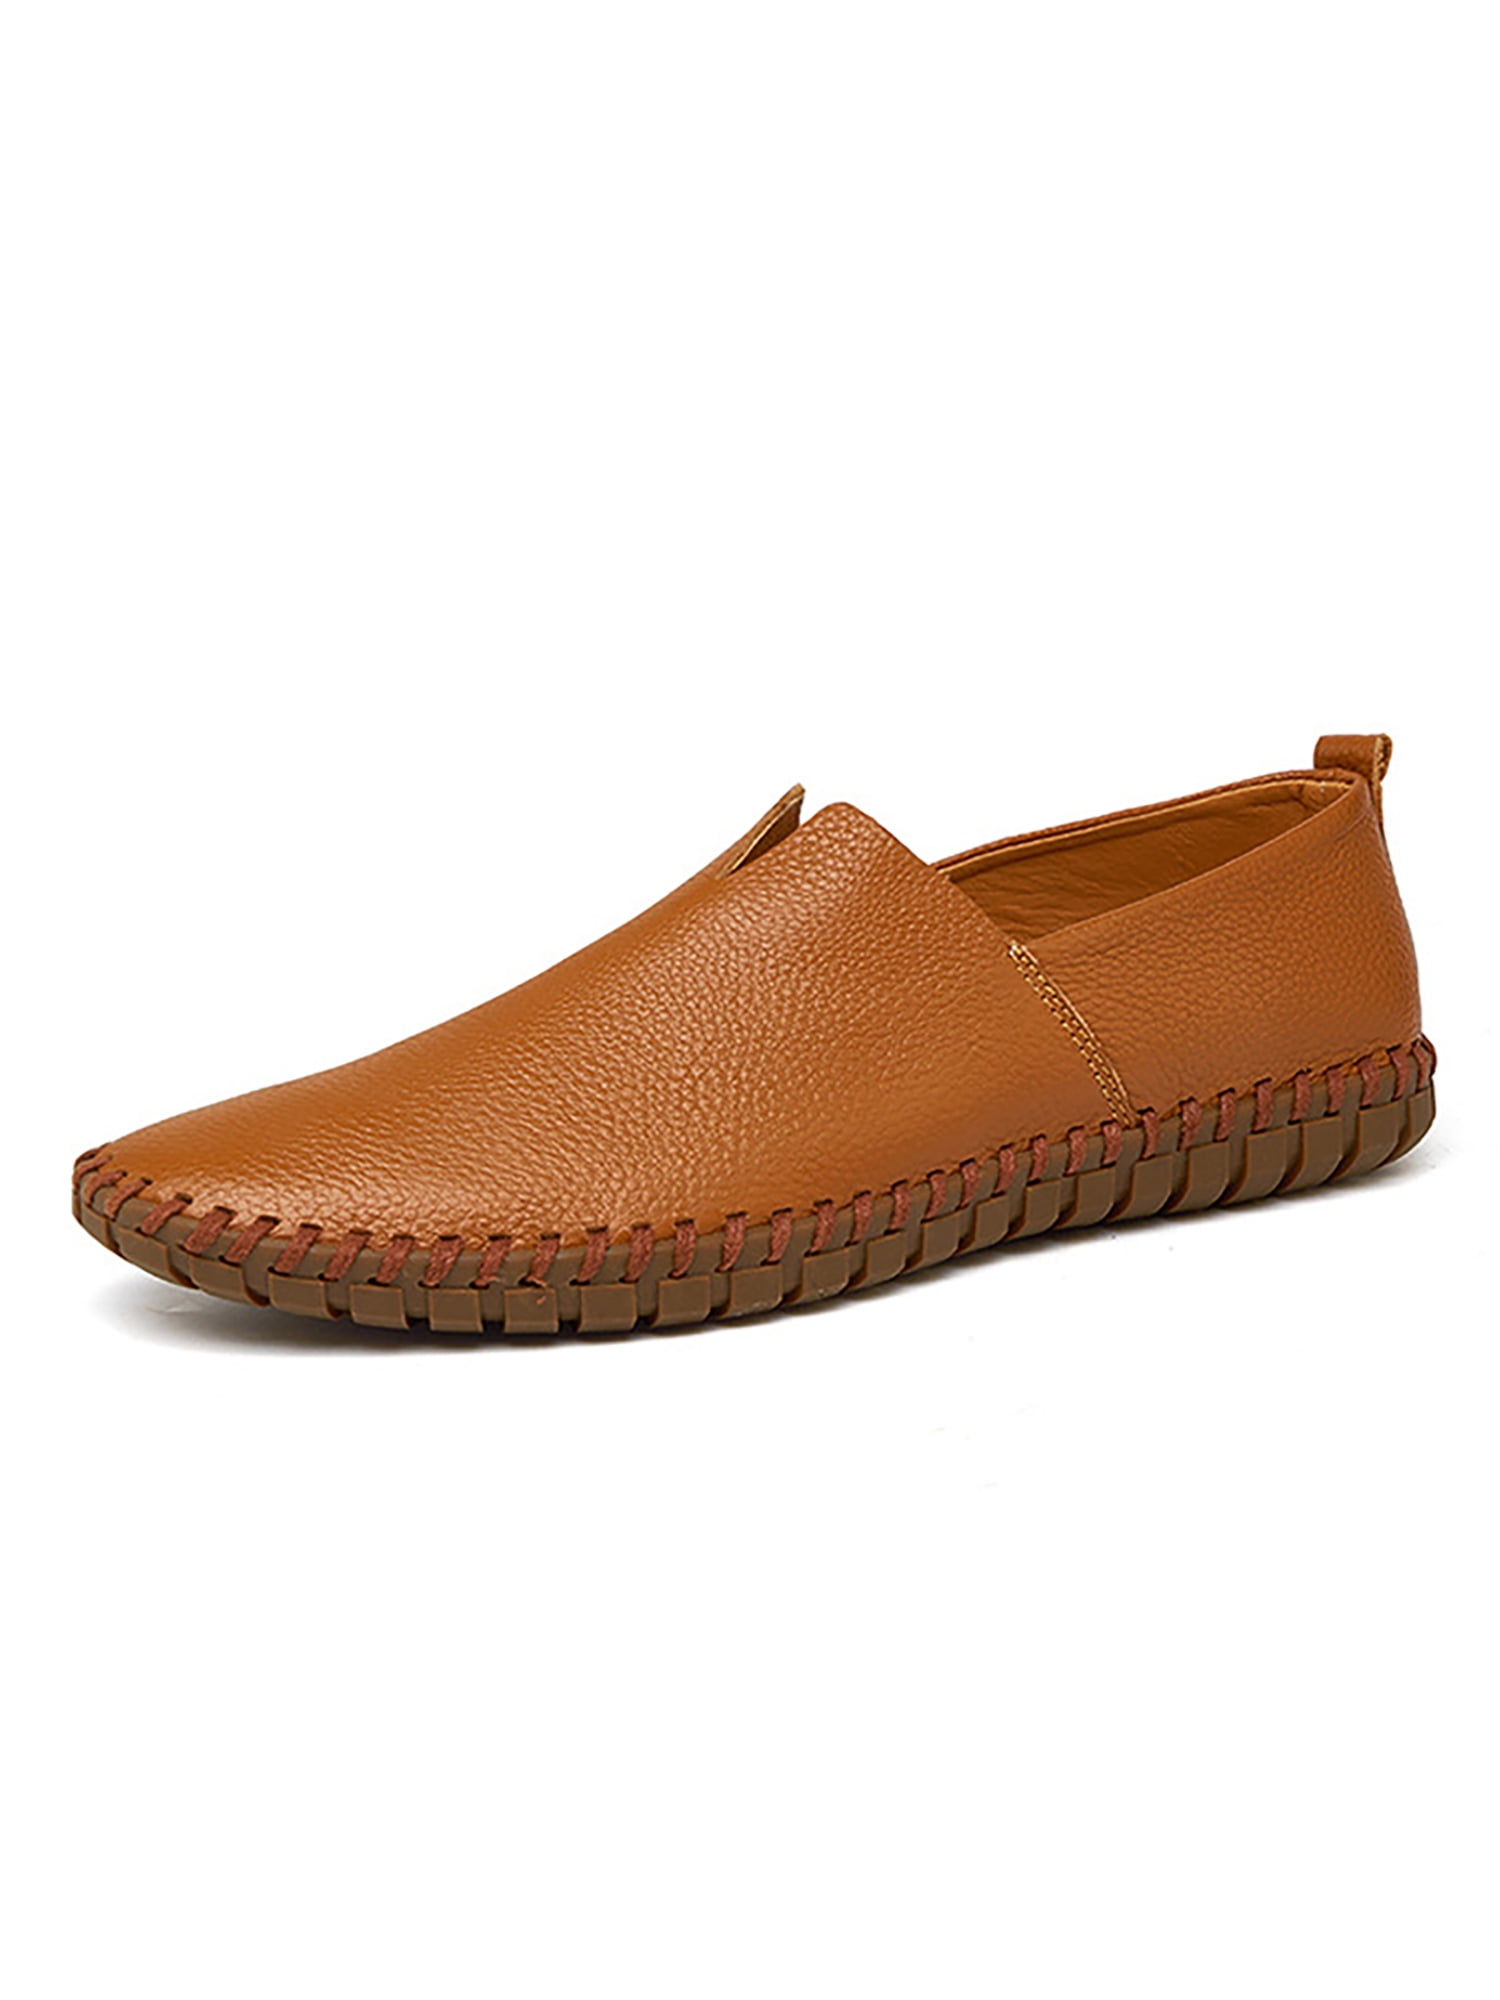 Color : Brown, Size : 10.5 M US JUN Mens Loafer Lightweight Slip On Driving Shoes Soft Penny Loafers Business Casual Penny Loafers for Men Slip on Dress Shoes for Men 